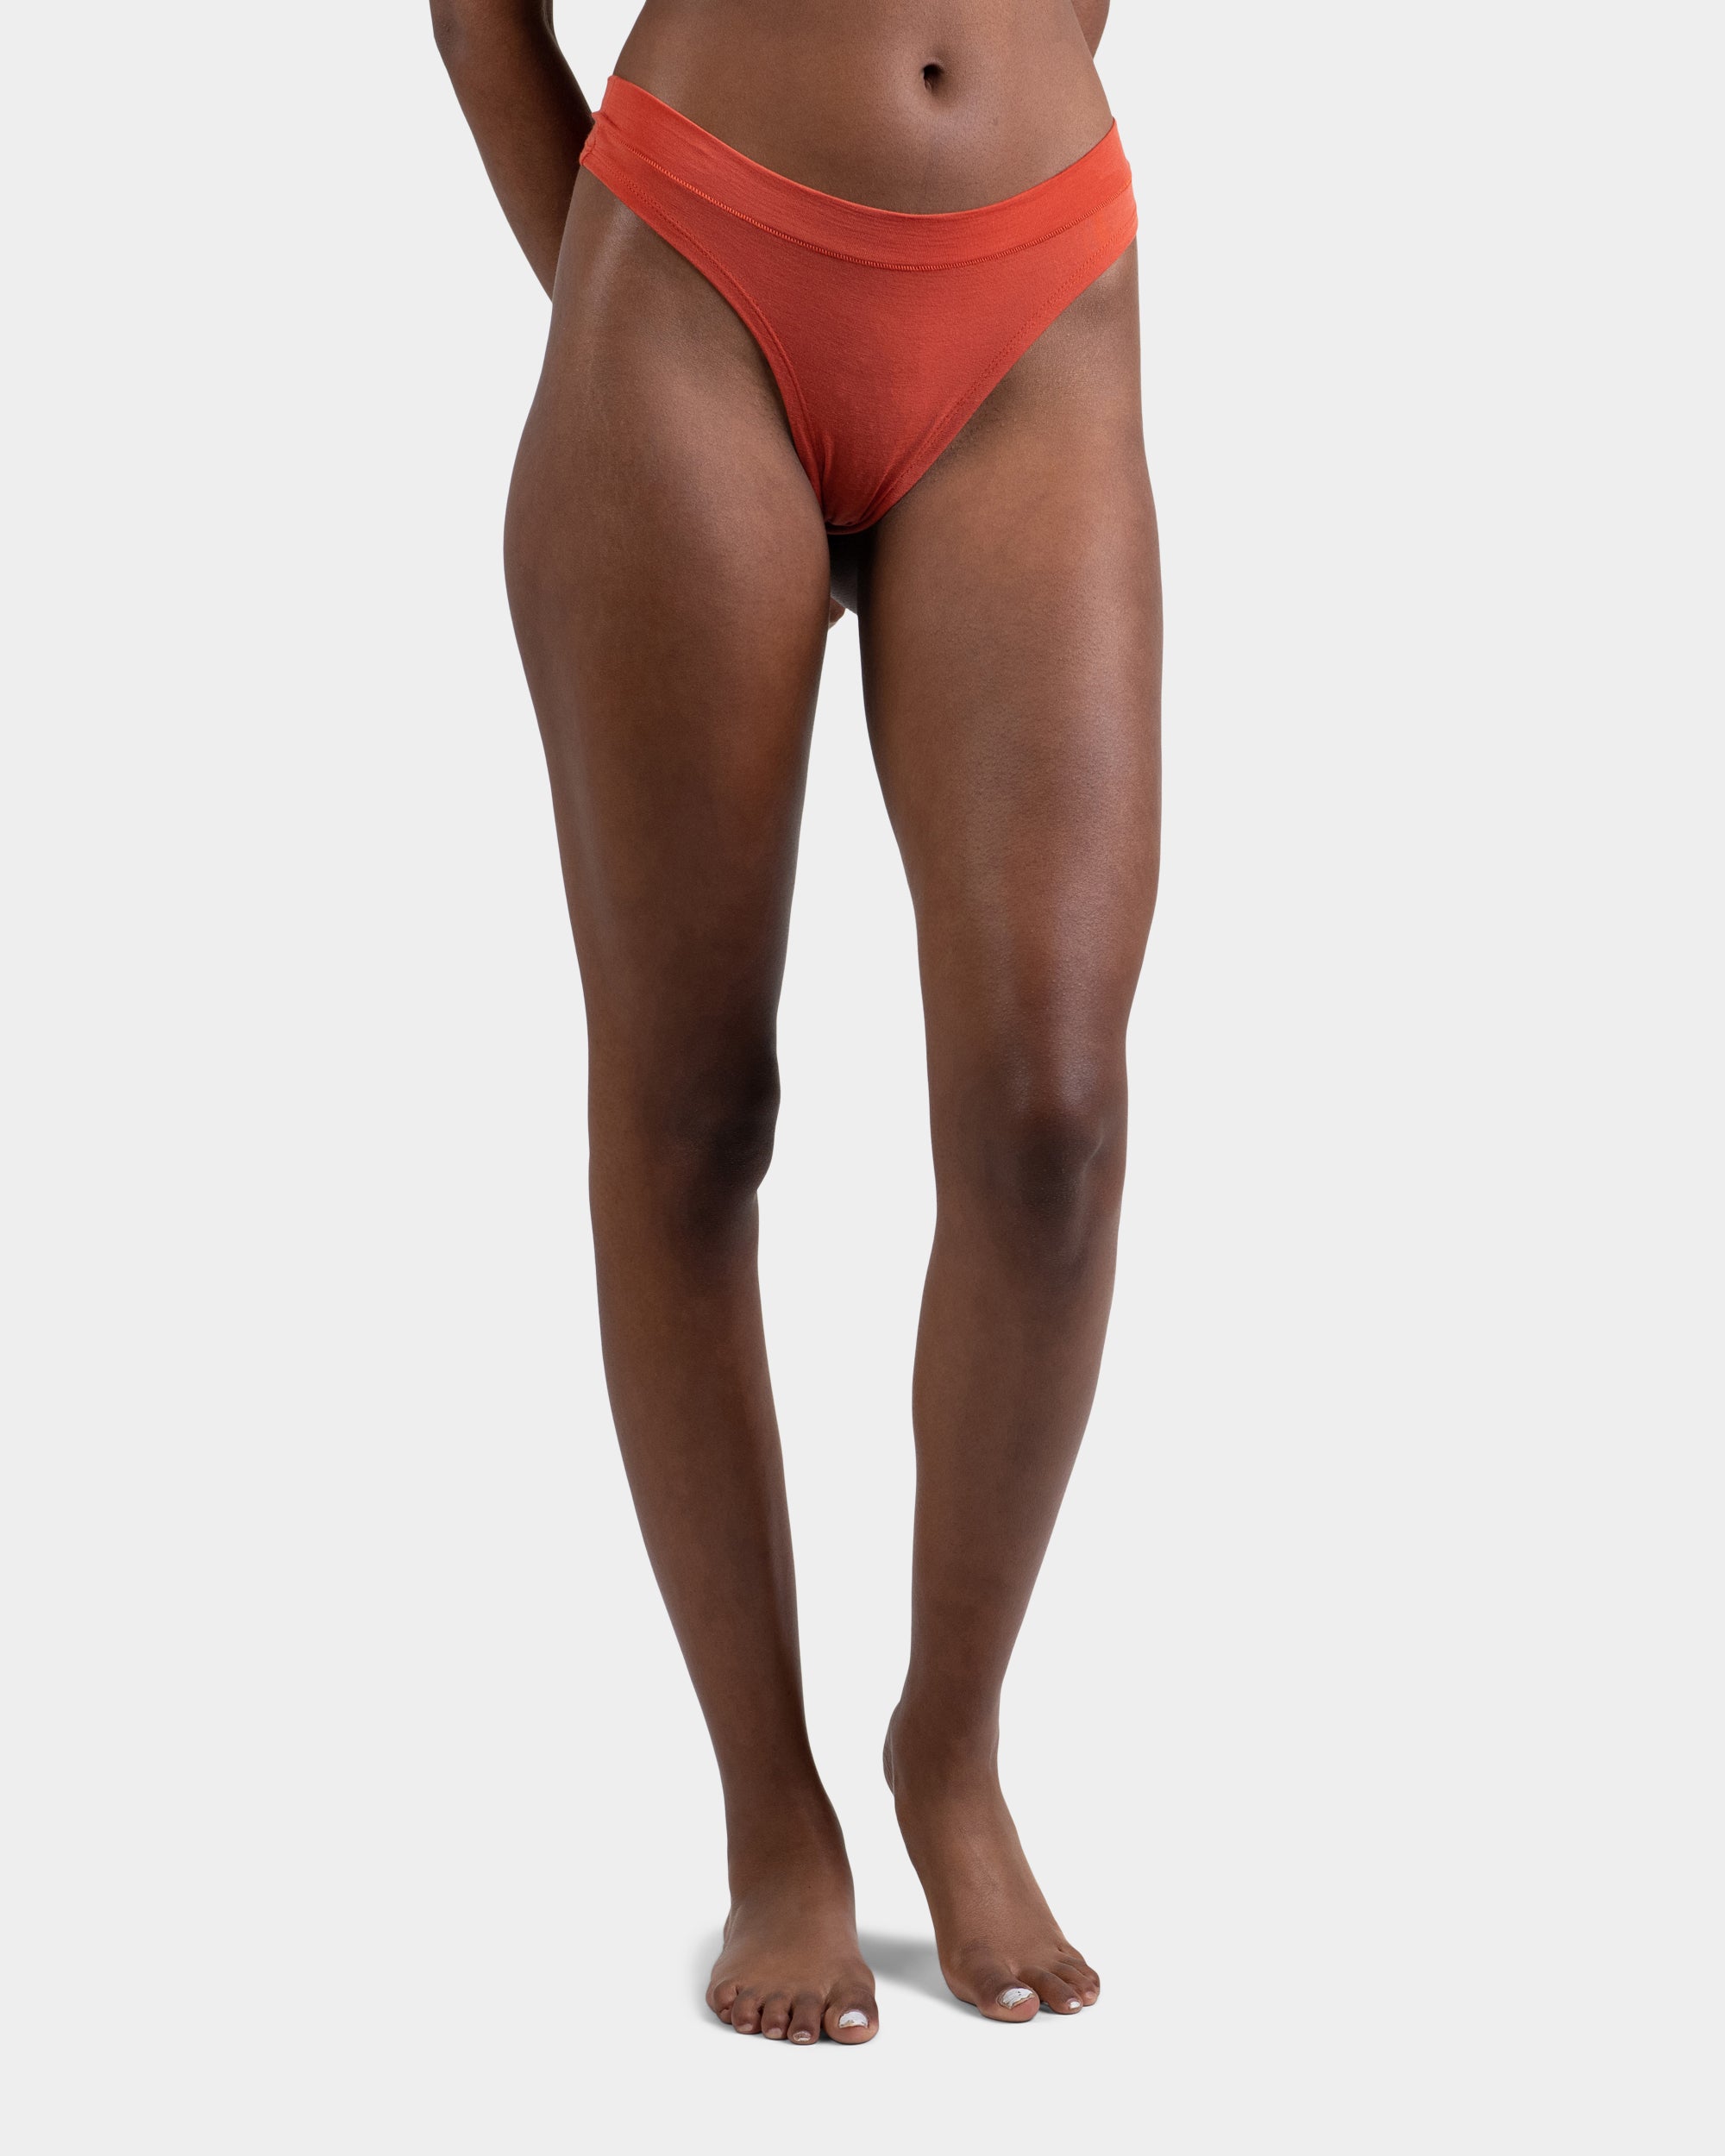 Women's Bamboo Underwear – Terrera